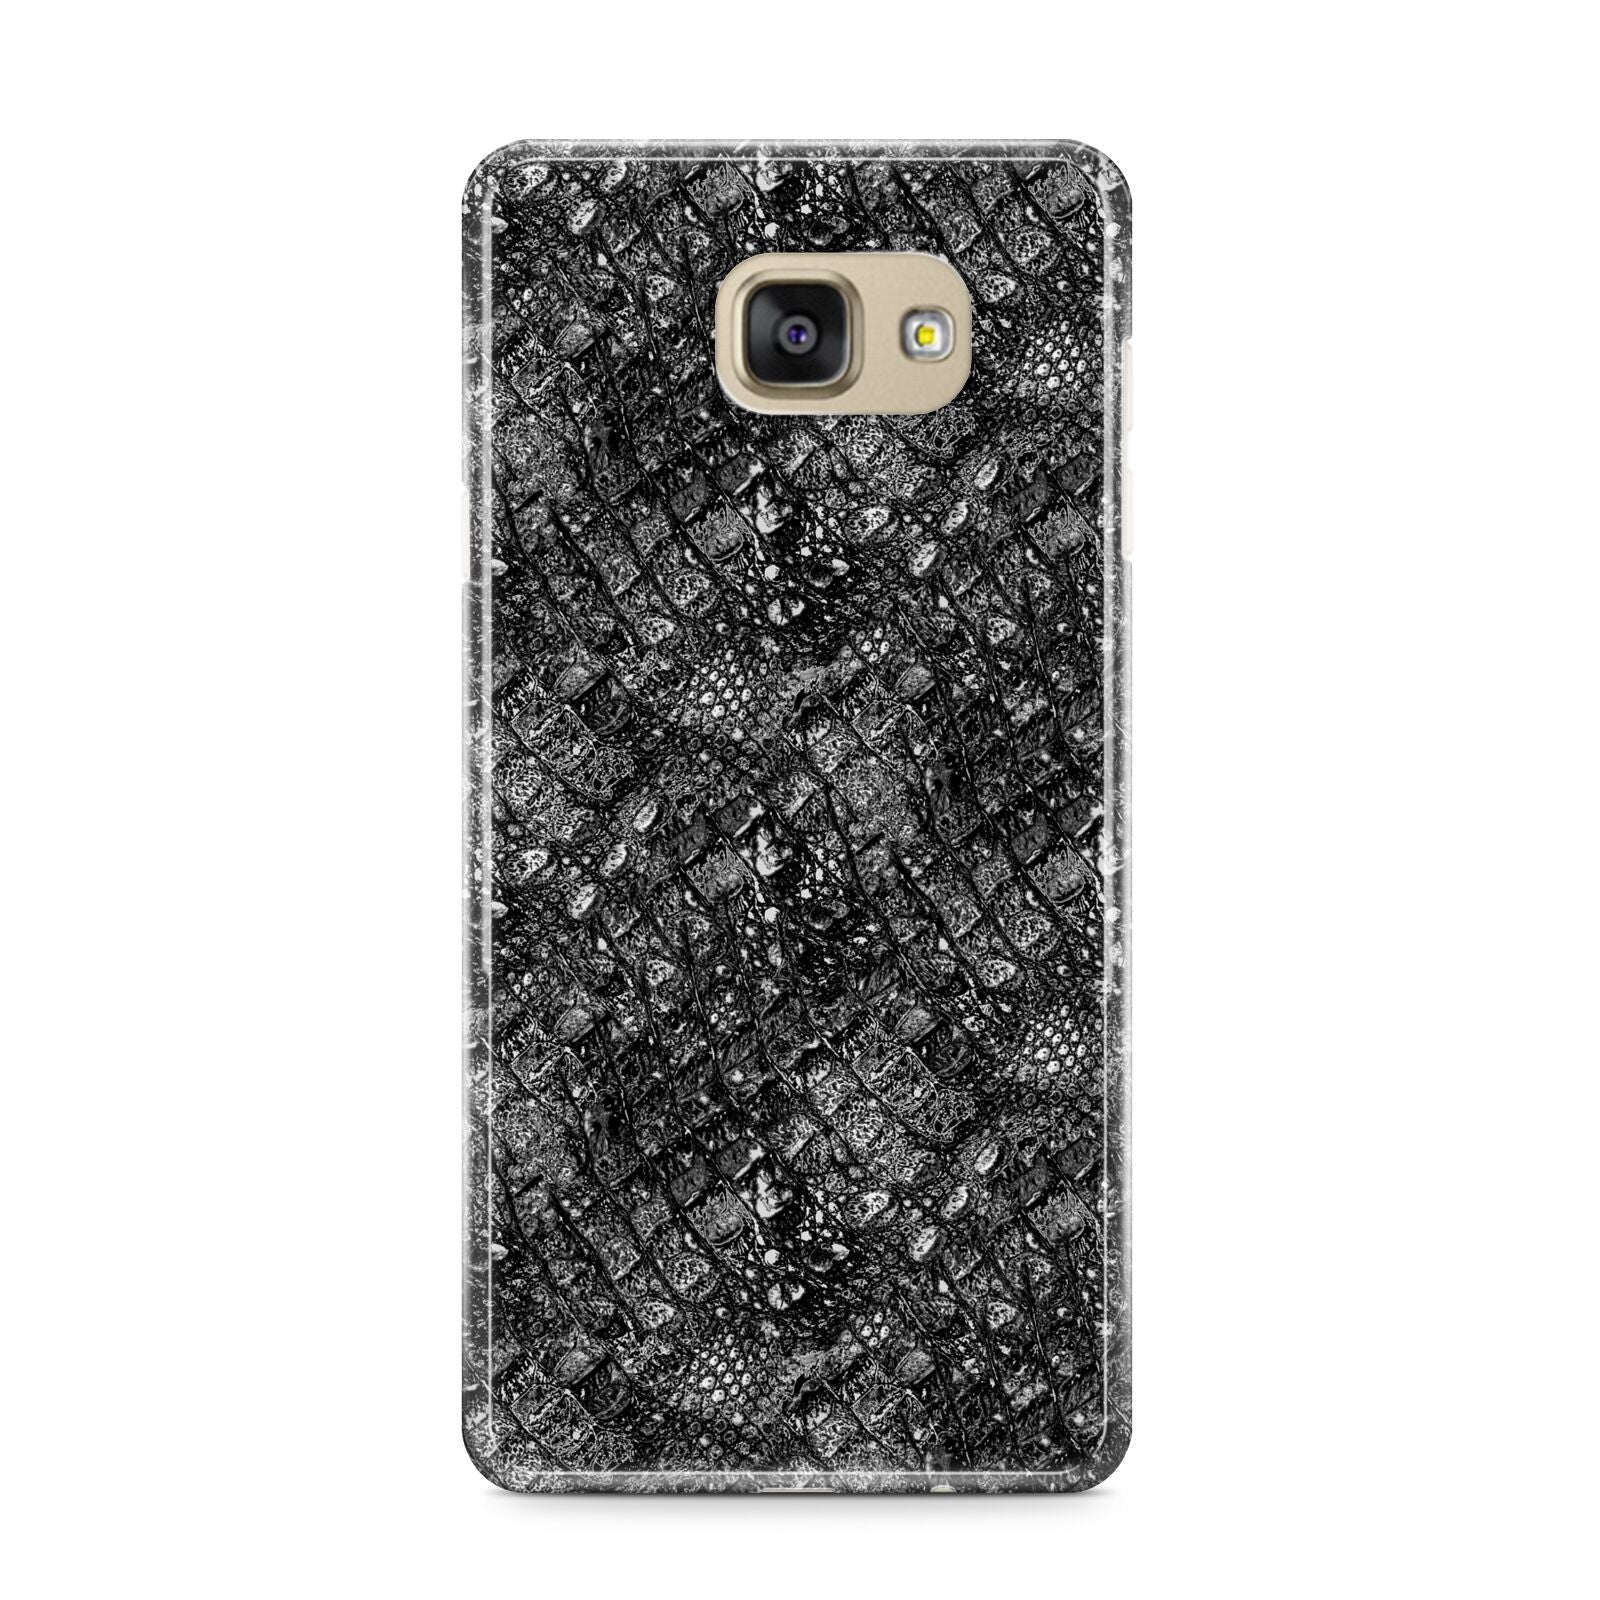 Snakeskin Design Samsung Galaxy A9 2016 Case on gold phone